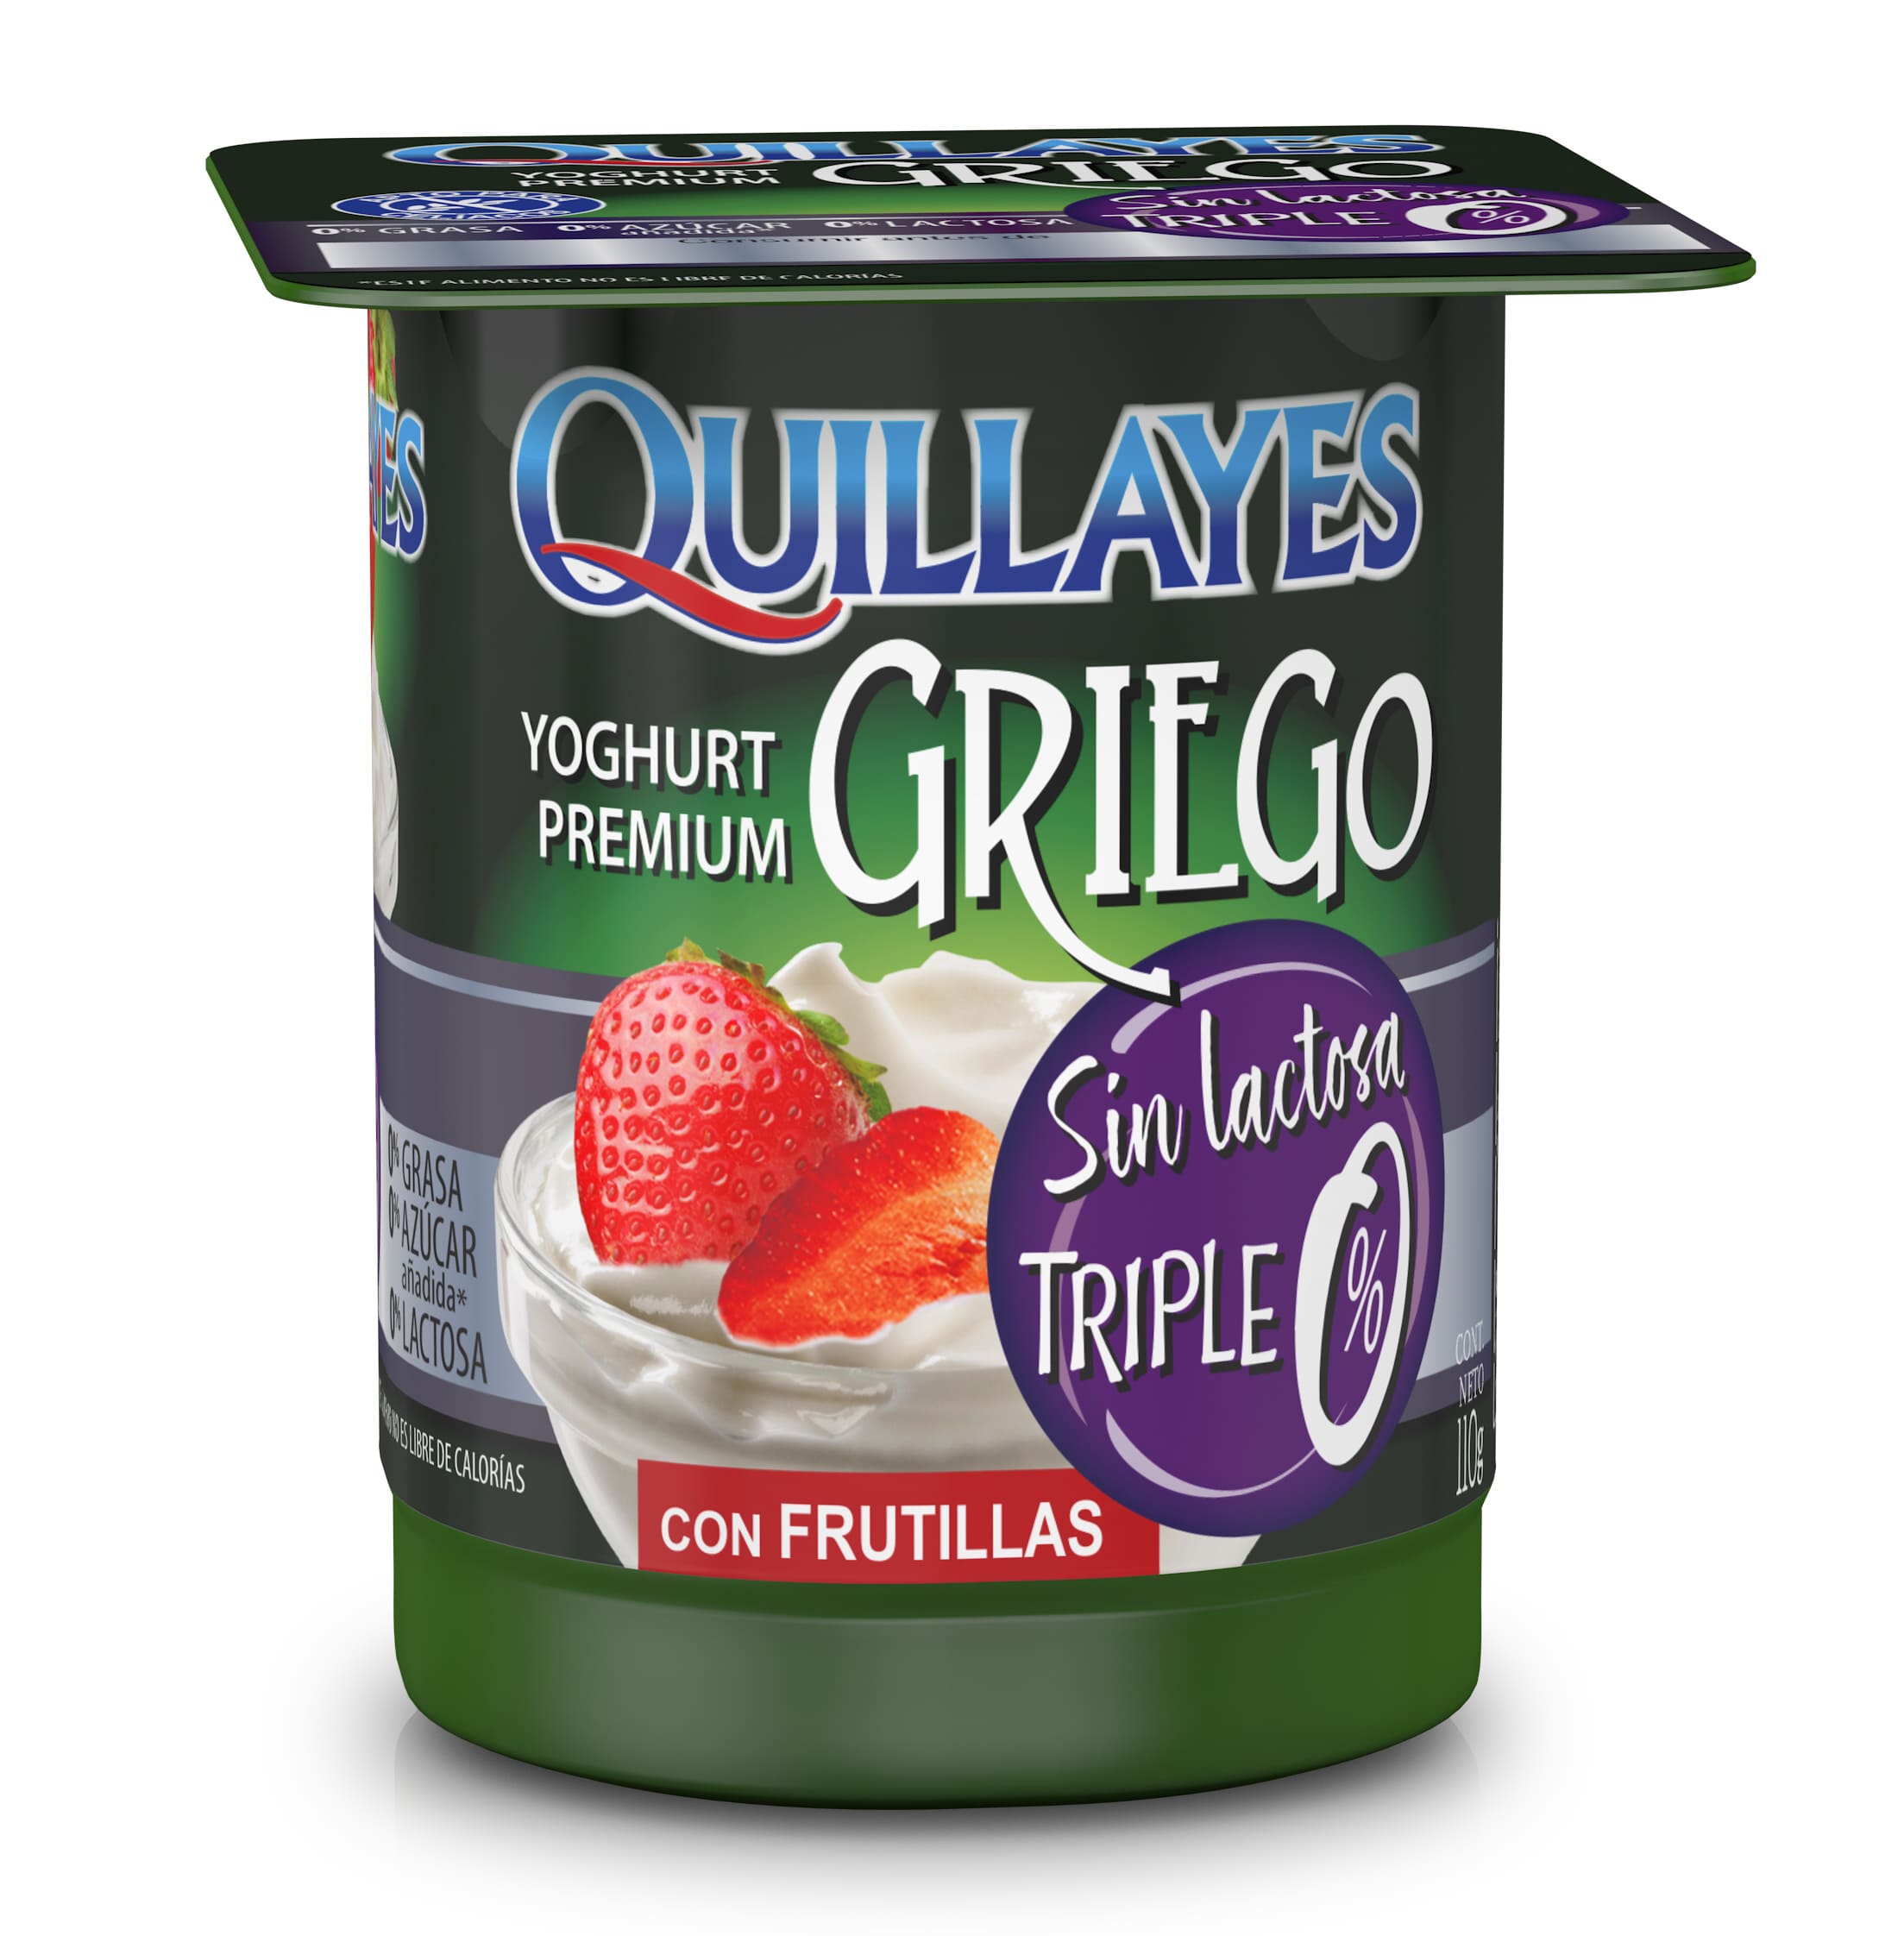 YOGURT GRIEGO S/LACTOSA TRIPLE 0 FRUTILLAS 110 g